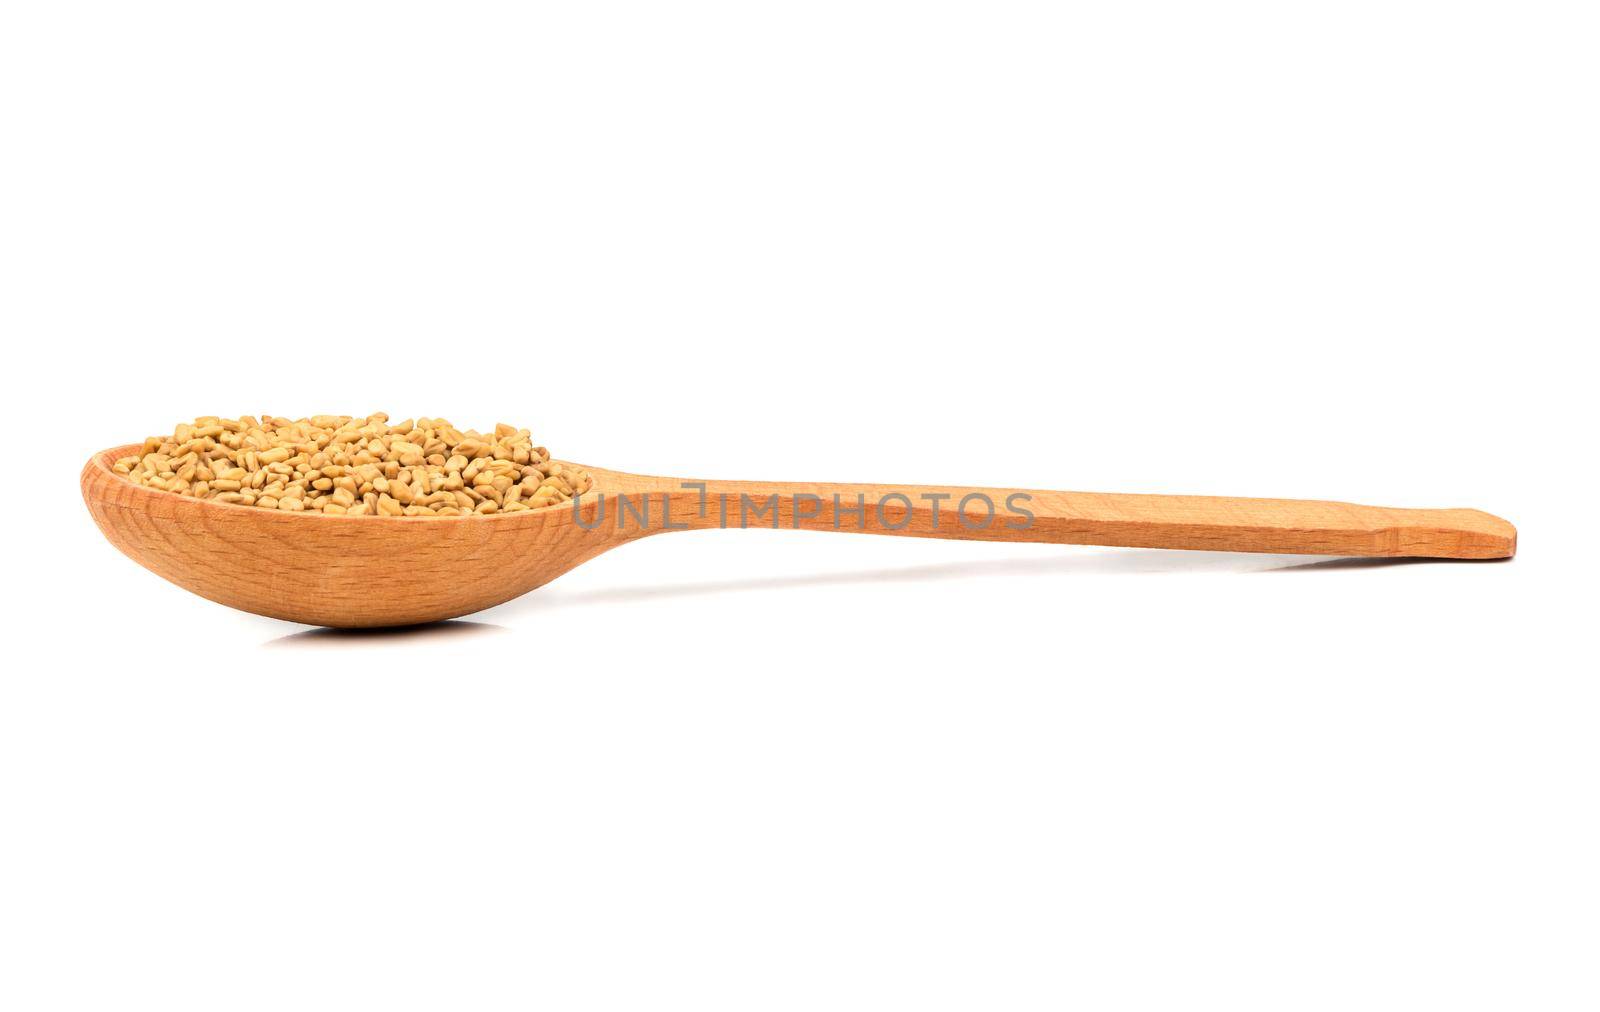 Seeds of fenugreek in wooden spoon on white background